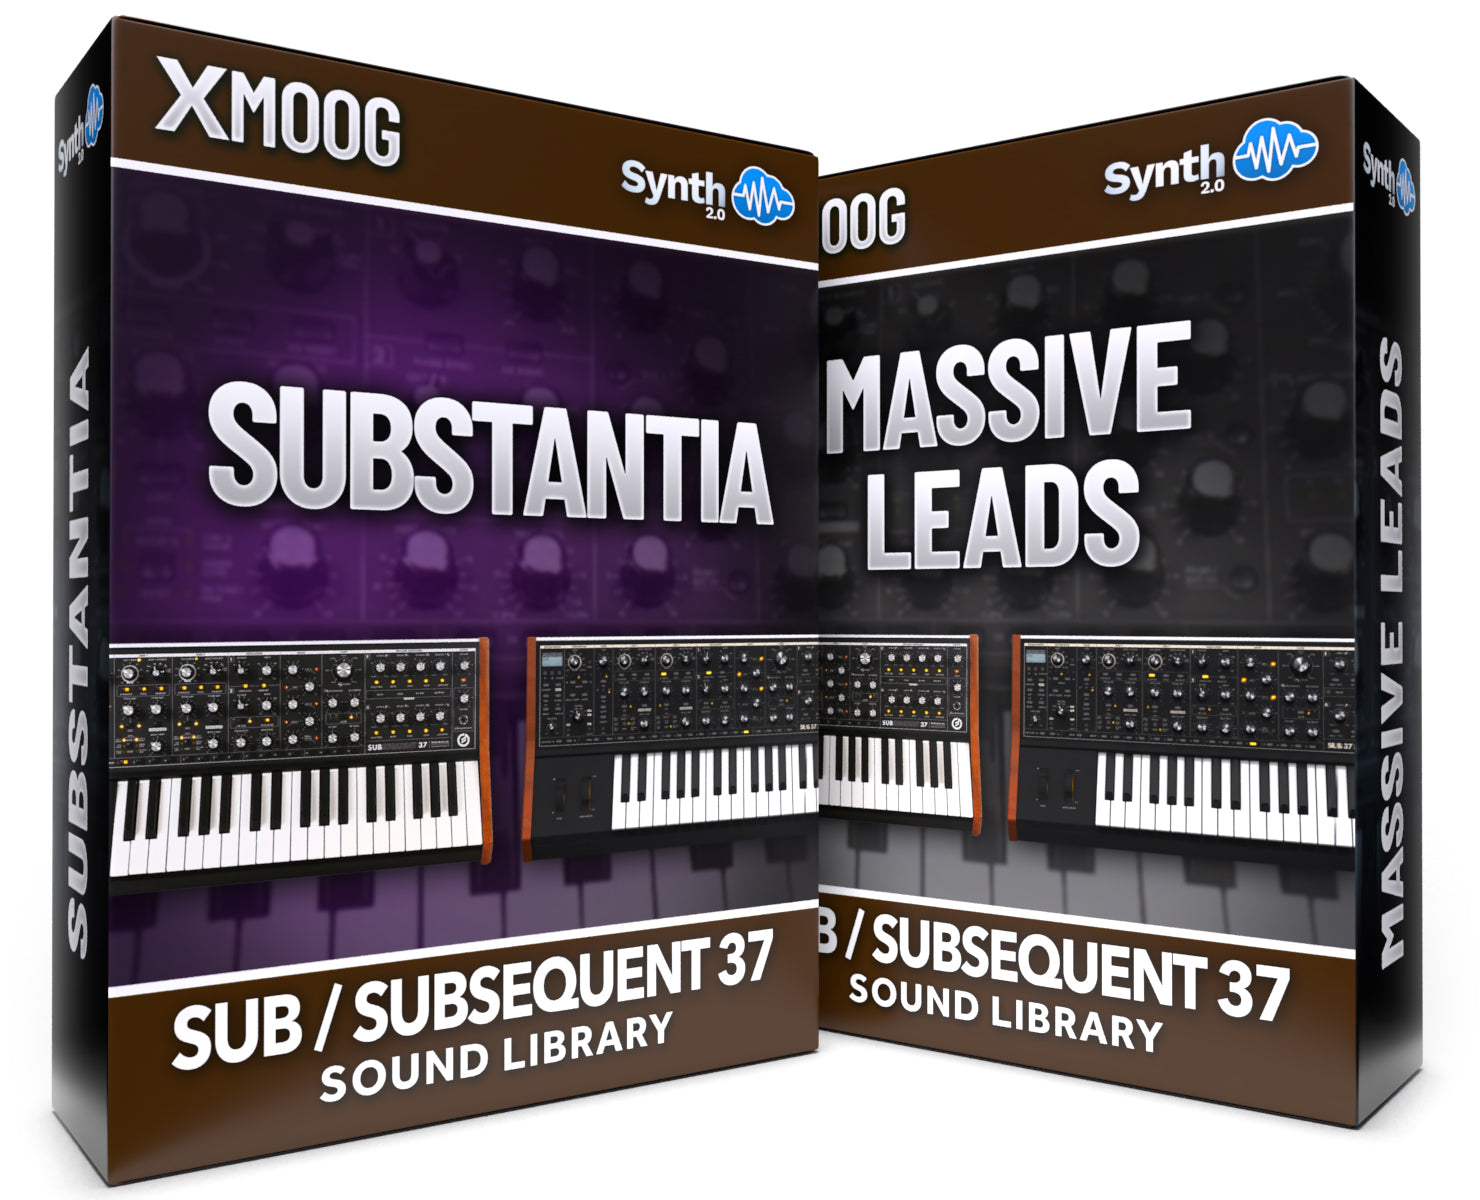 SCL308 - ( Bundle ) - Substantia + Massive Leads - Moog Sub 37 / Subsequent 37